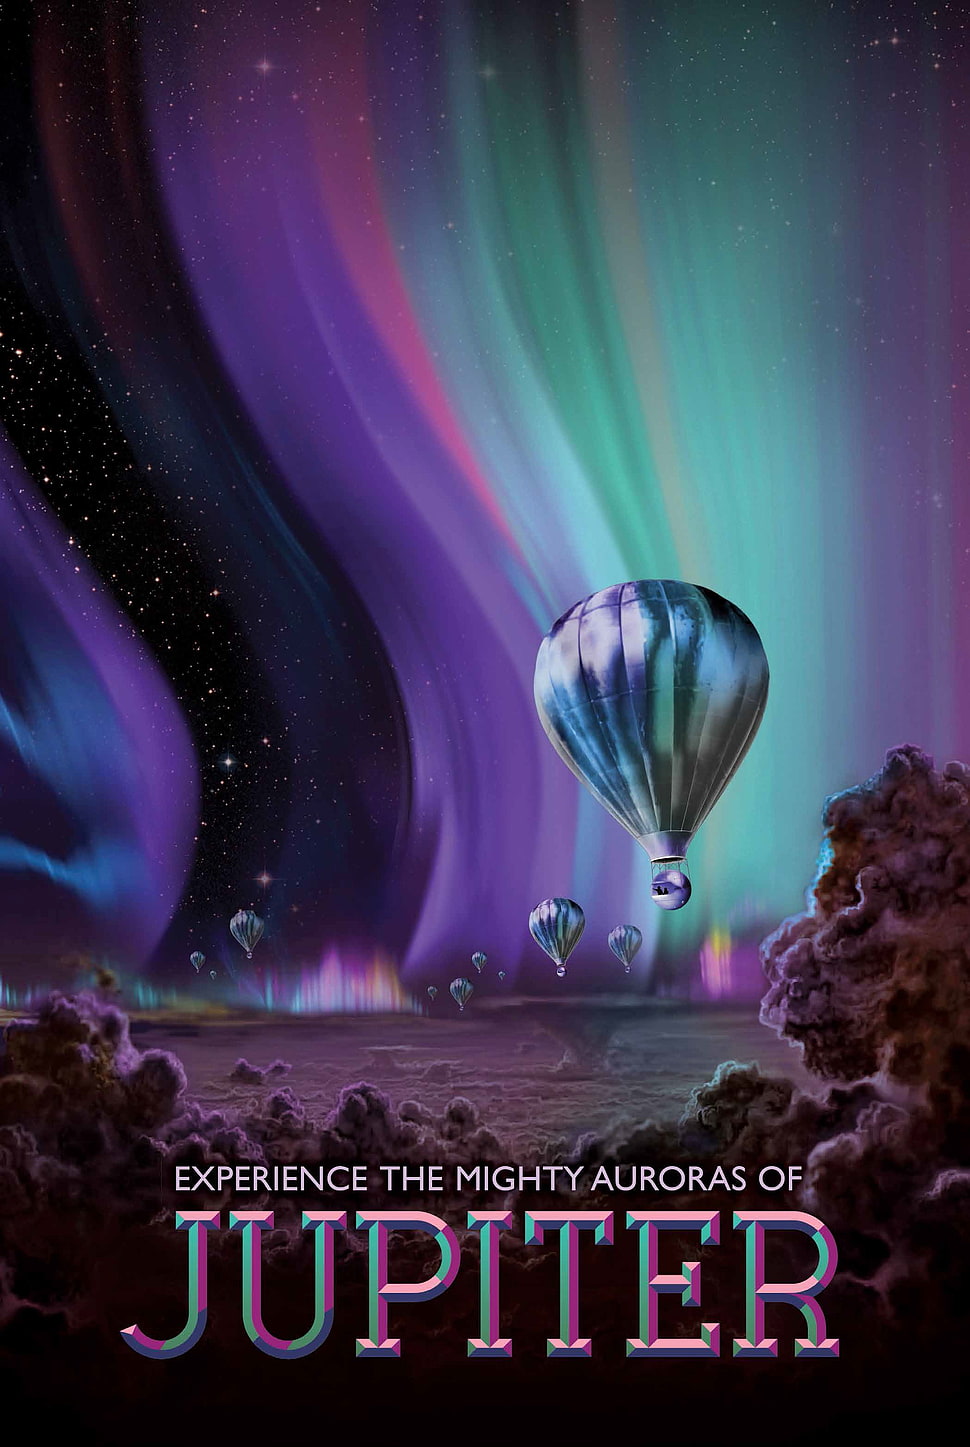 Jupiter digital wallpaper, space, planet, Travel posters, NASA HD wallpaper